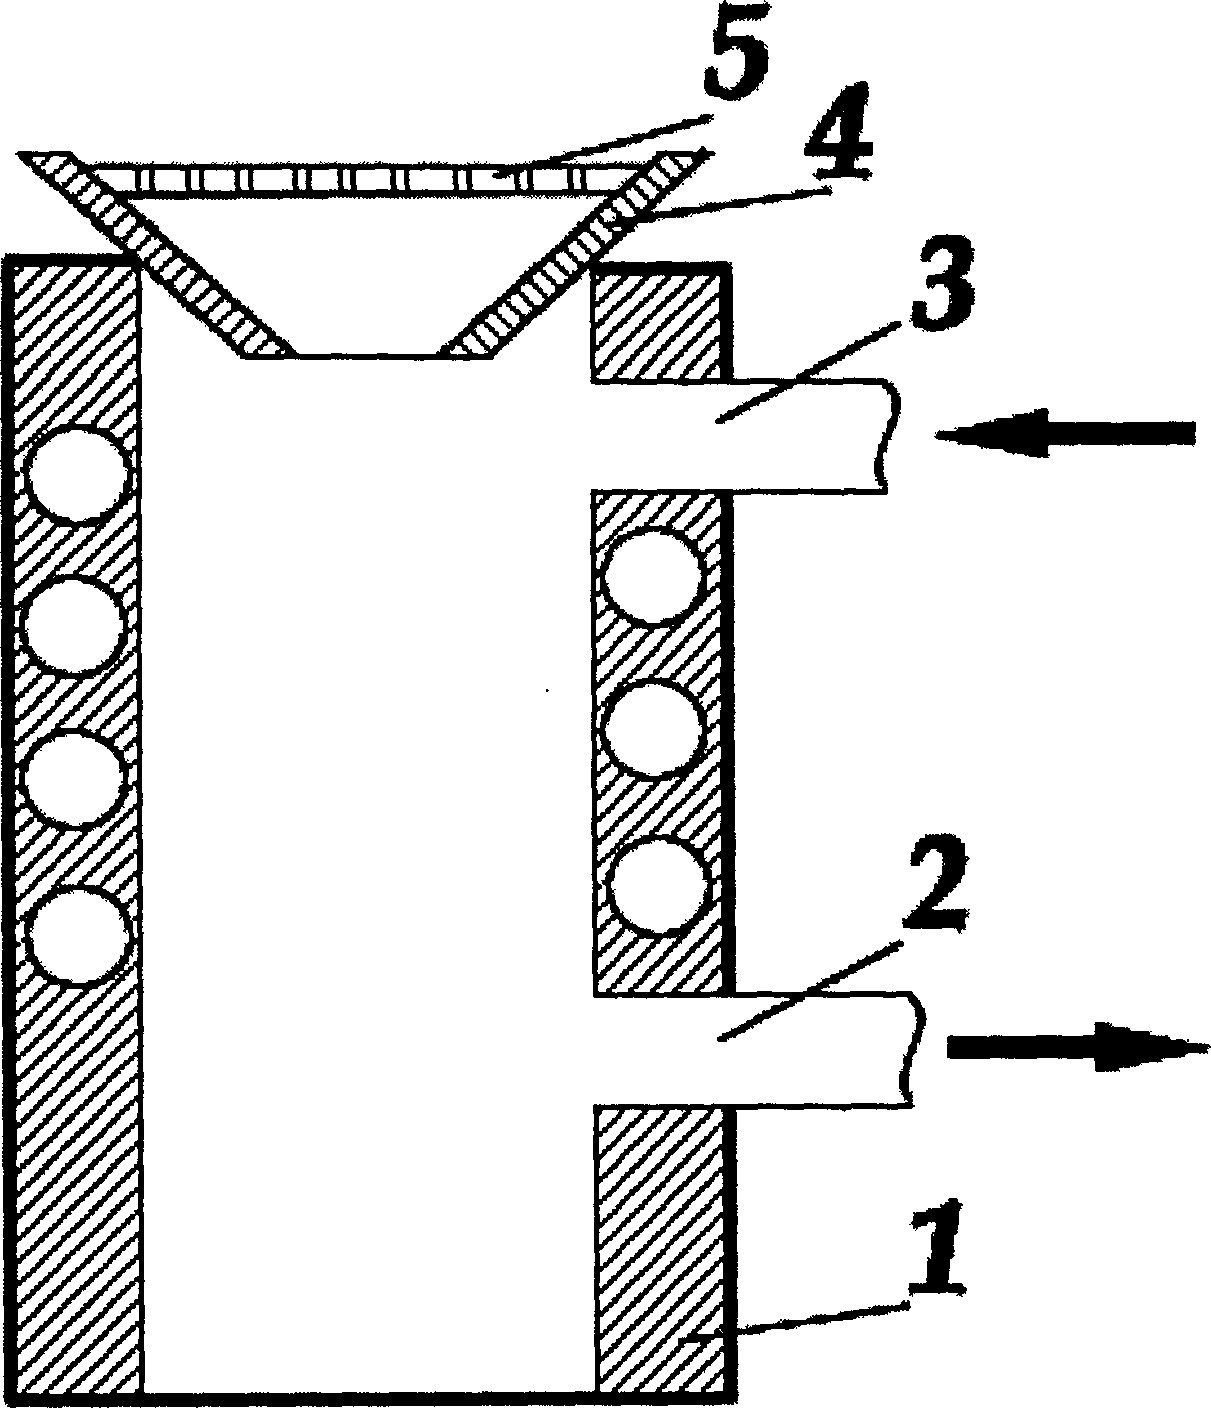 Method for producing high puriy, laminar cast ingot of Nd-Fe-B alloys